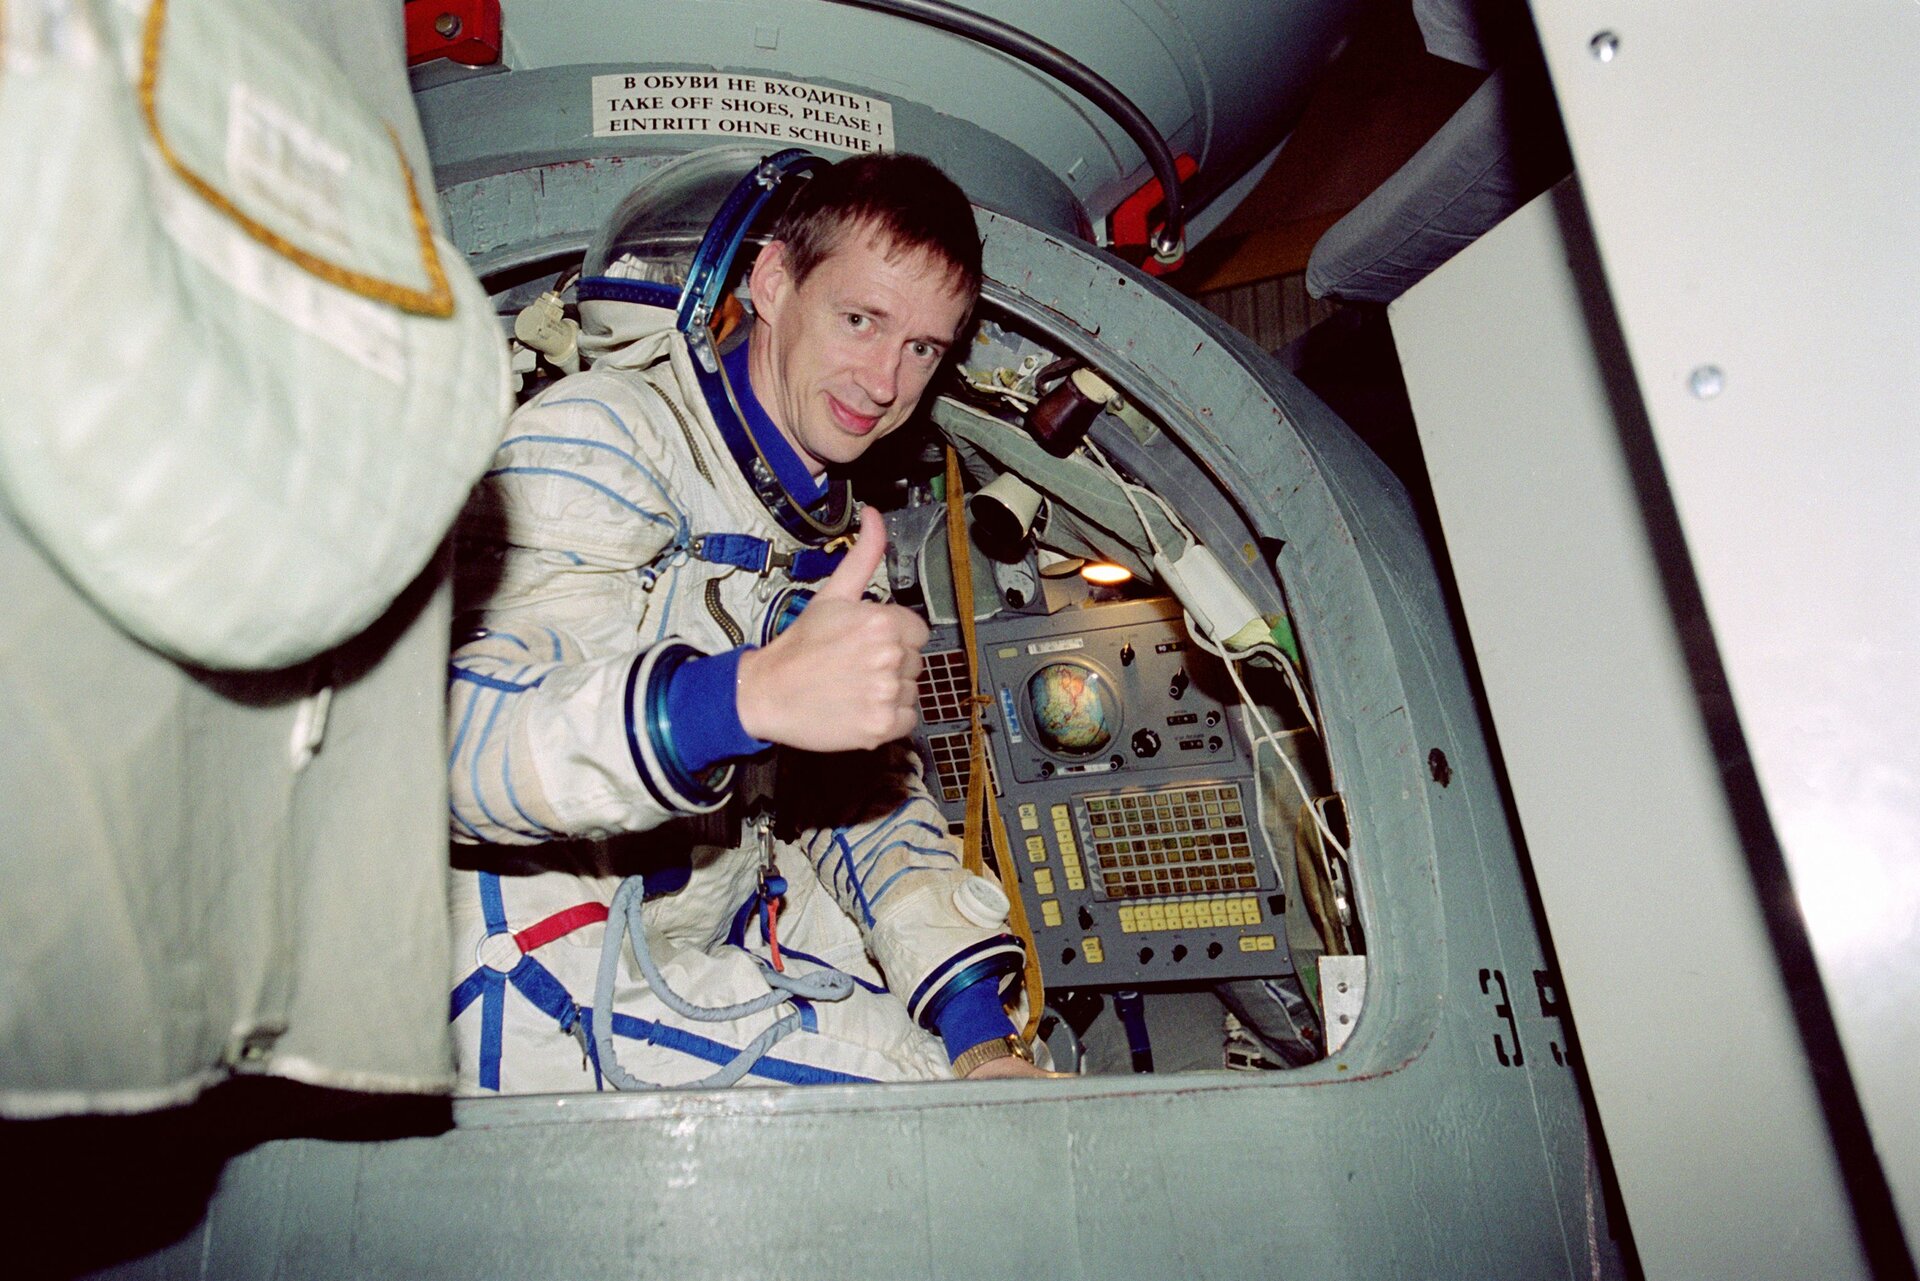 Frank De Winne in the Soyuz simulator during training at Star City